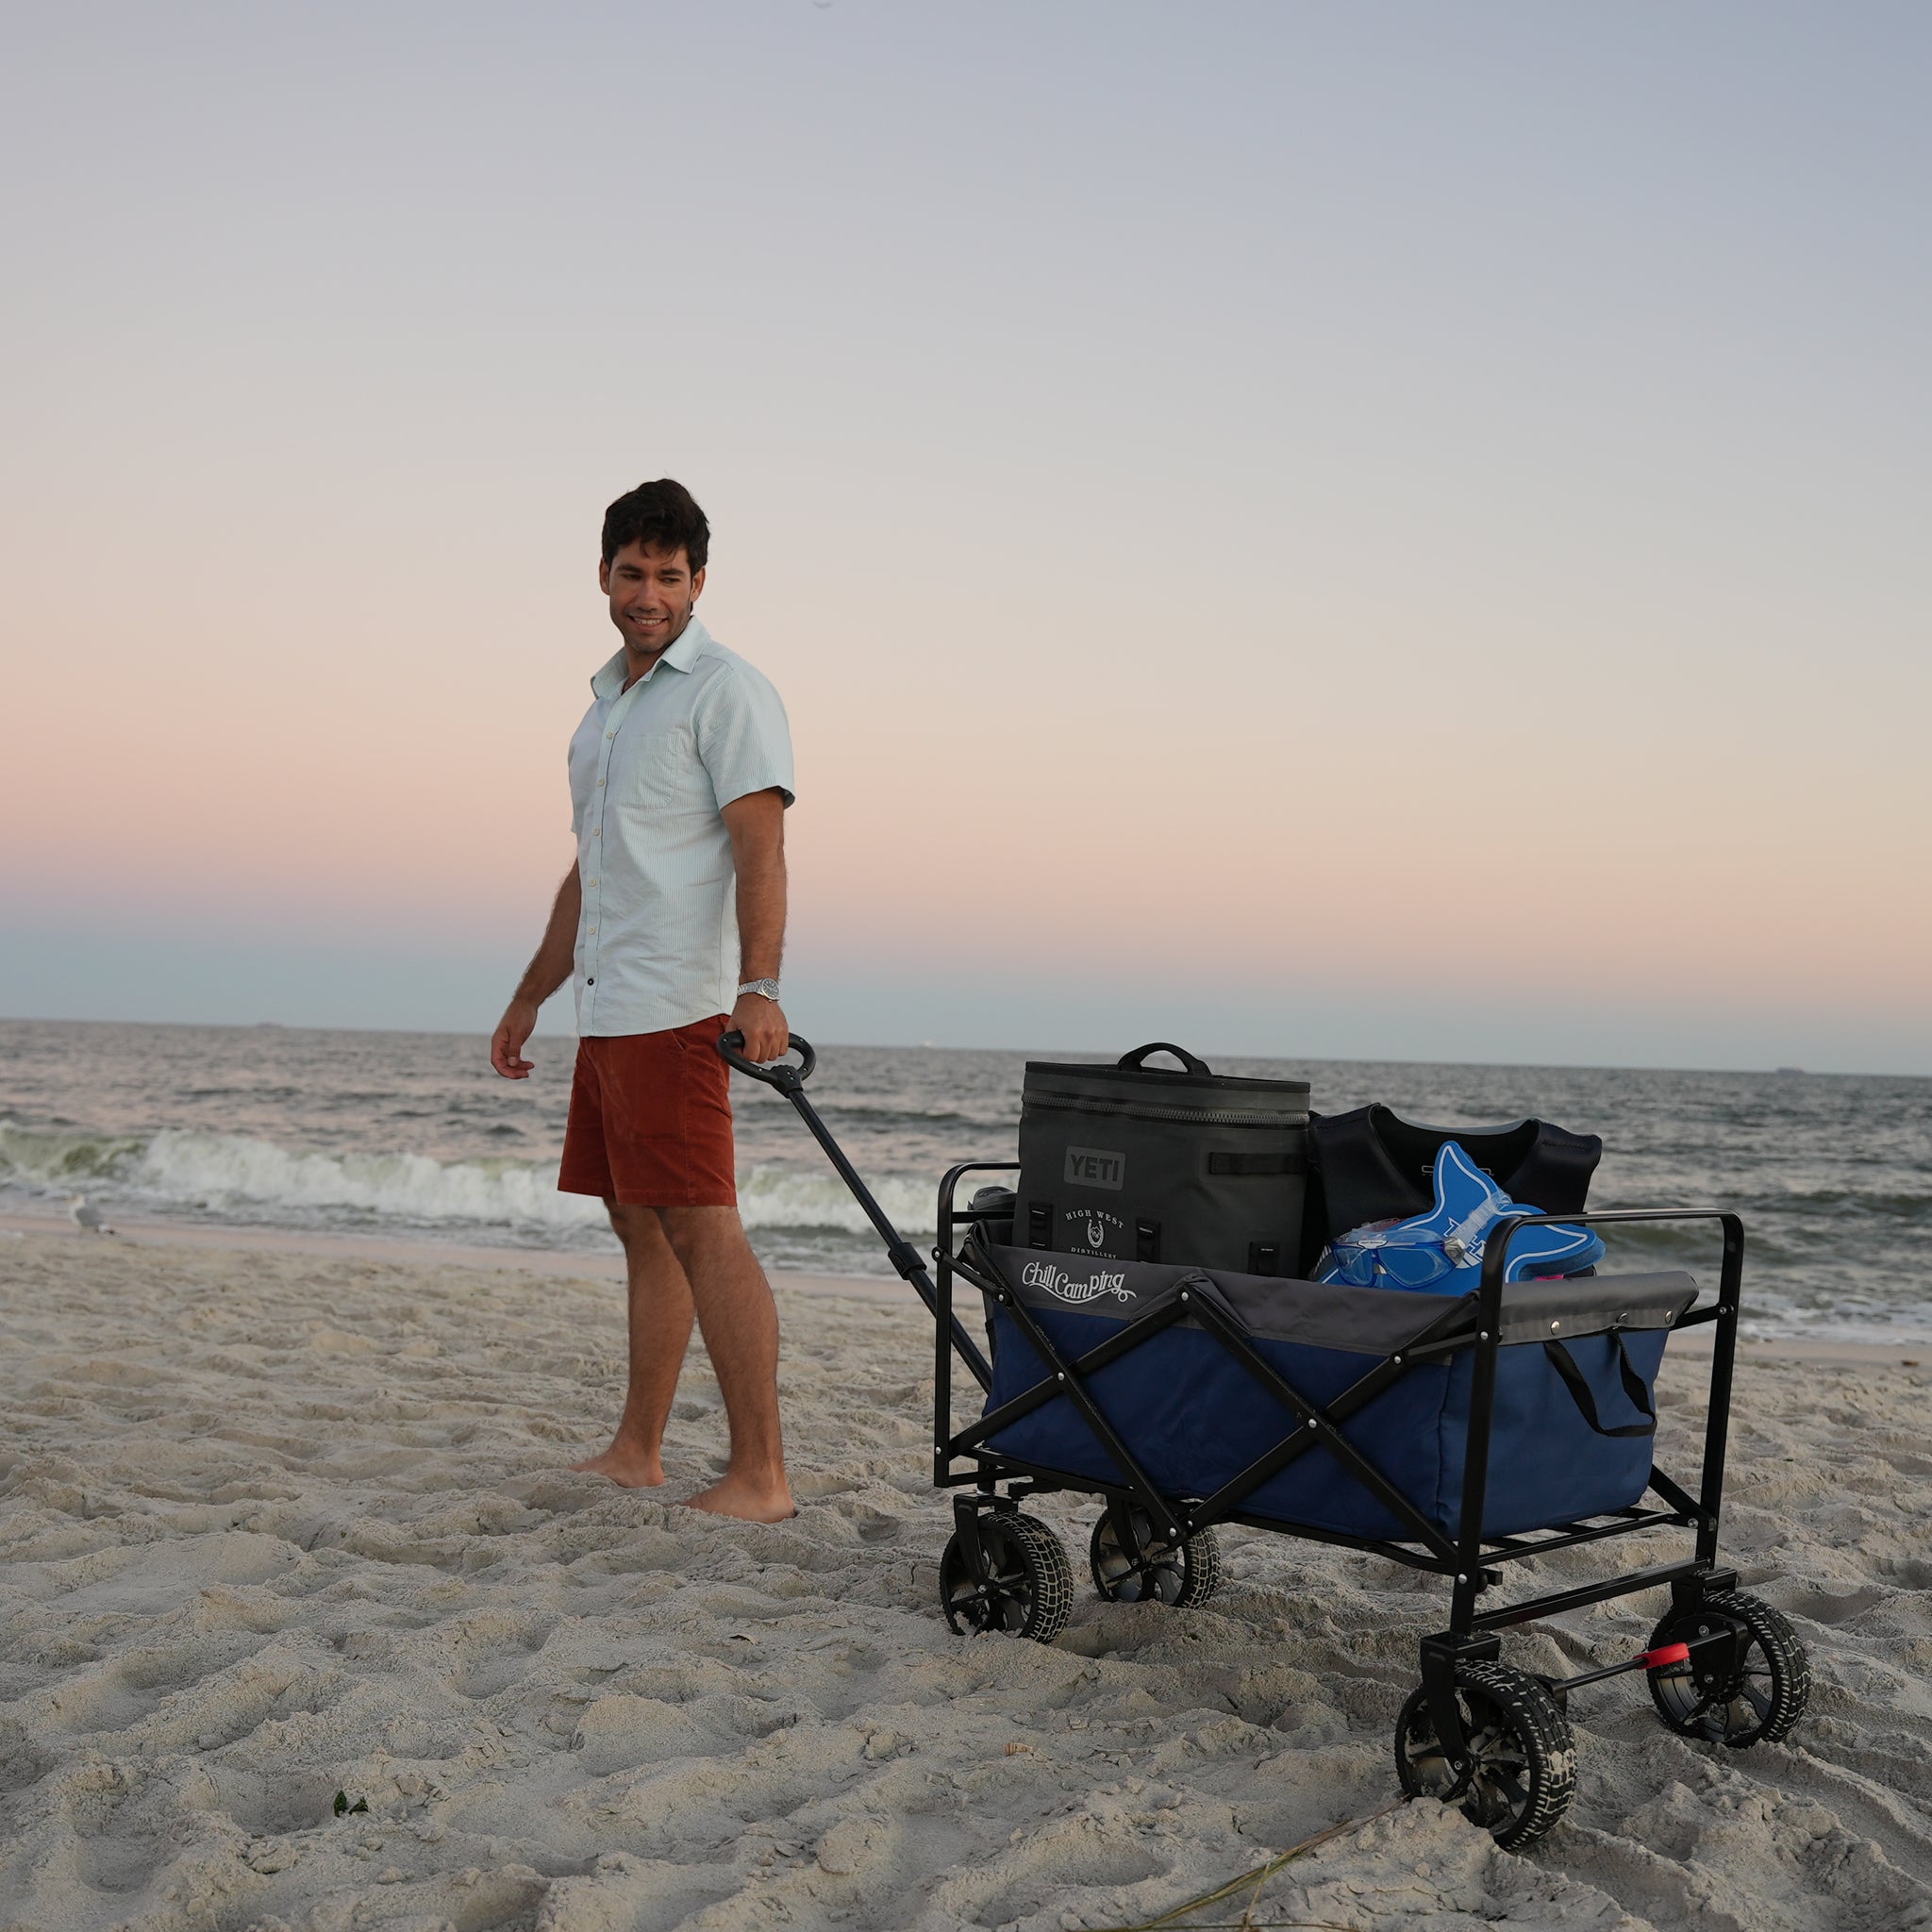 juggernaut carts collapsible folding outdoor beach utility wagon